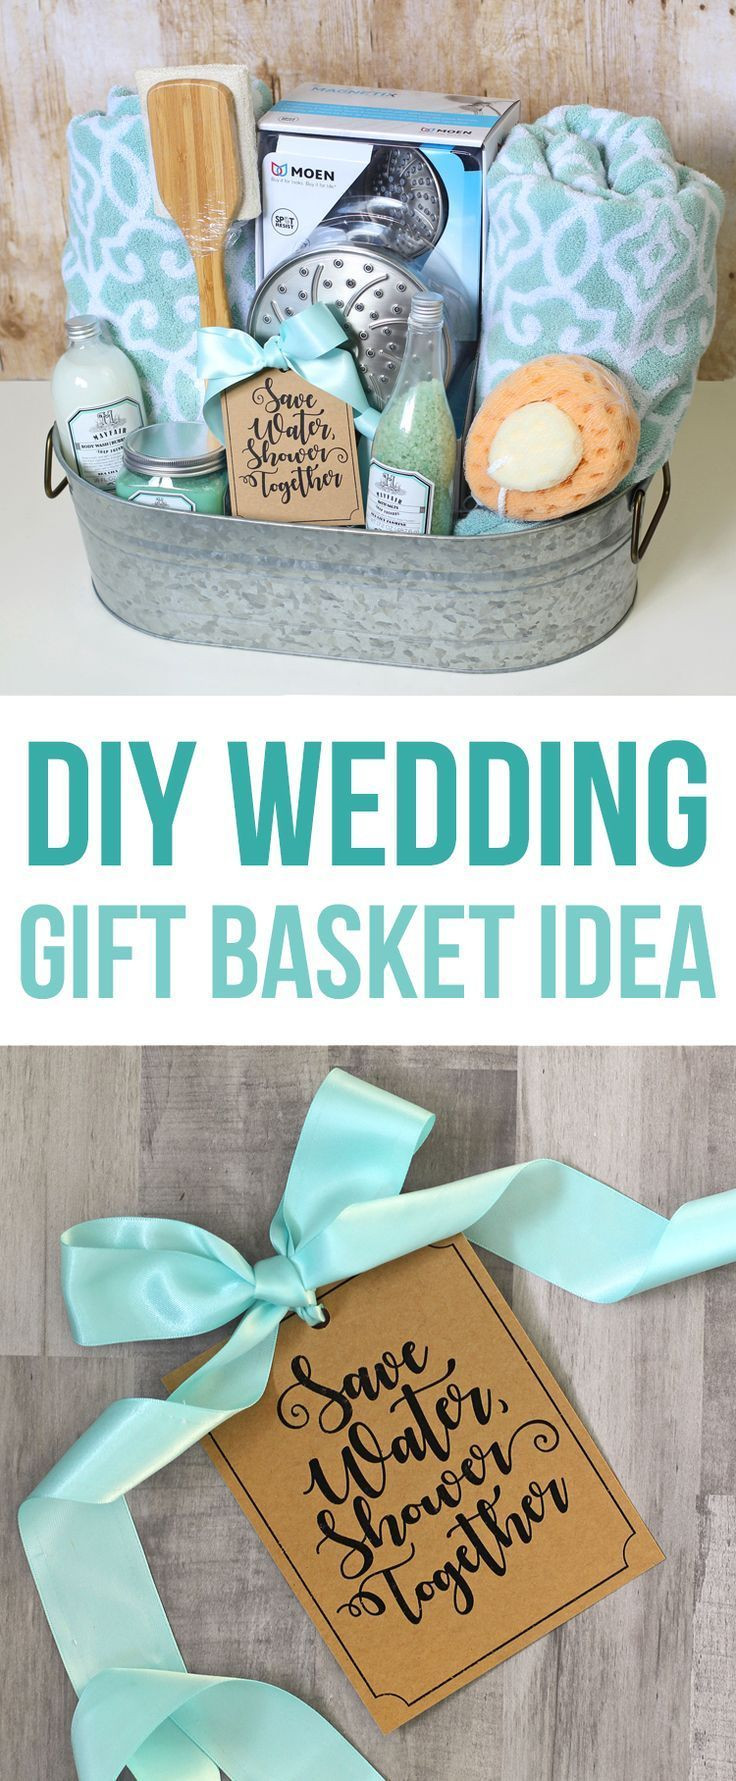 DIY Wedding Gift Baskets
 Shower Themed DIY Wedding Gift Basket Idea